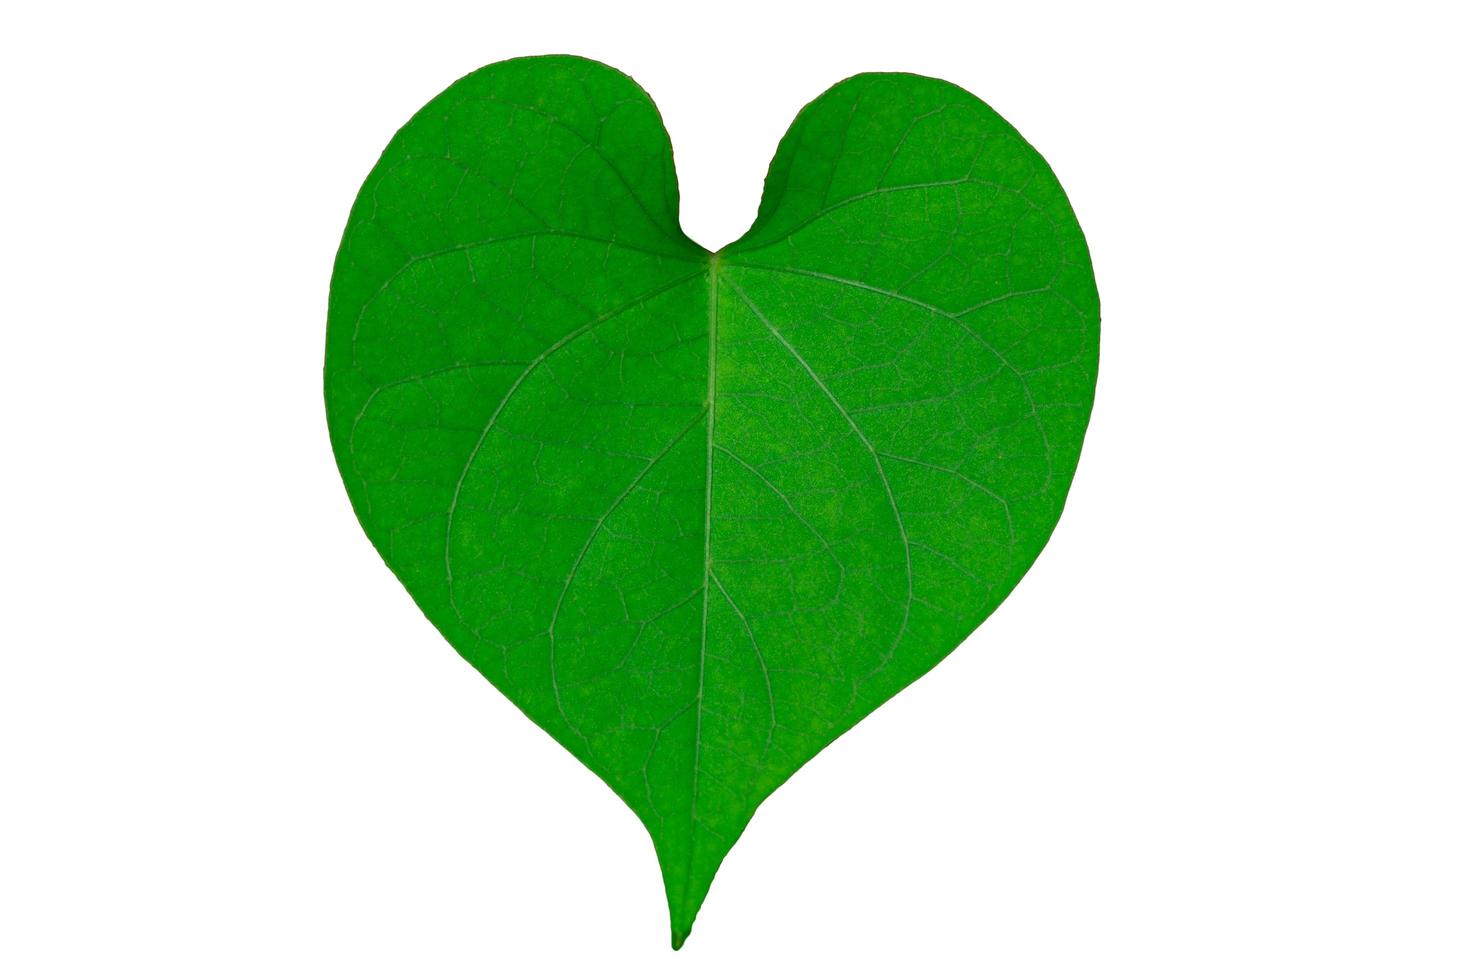 Green leaf on white background photo